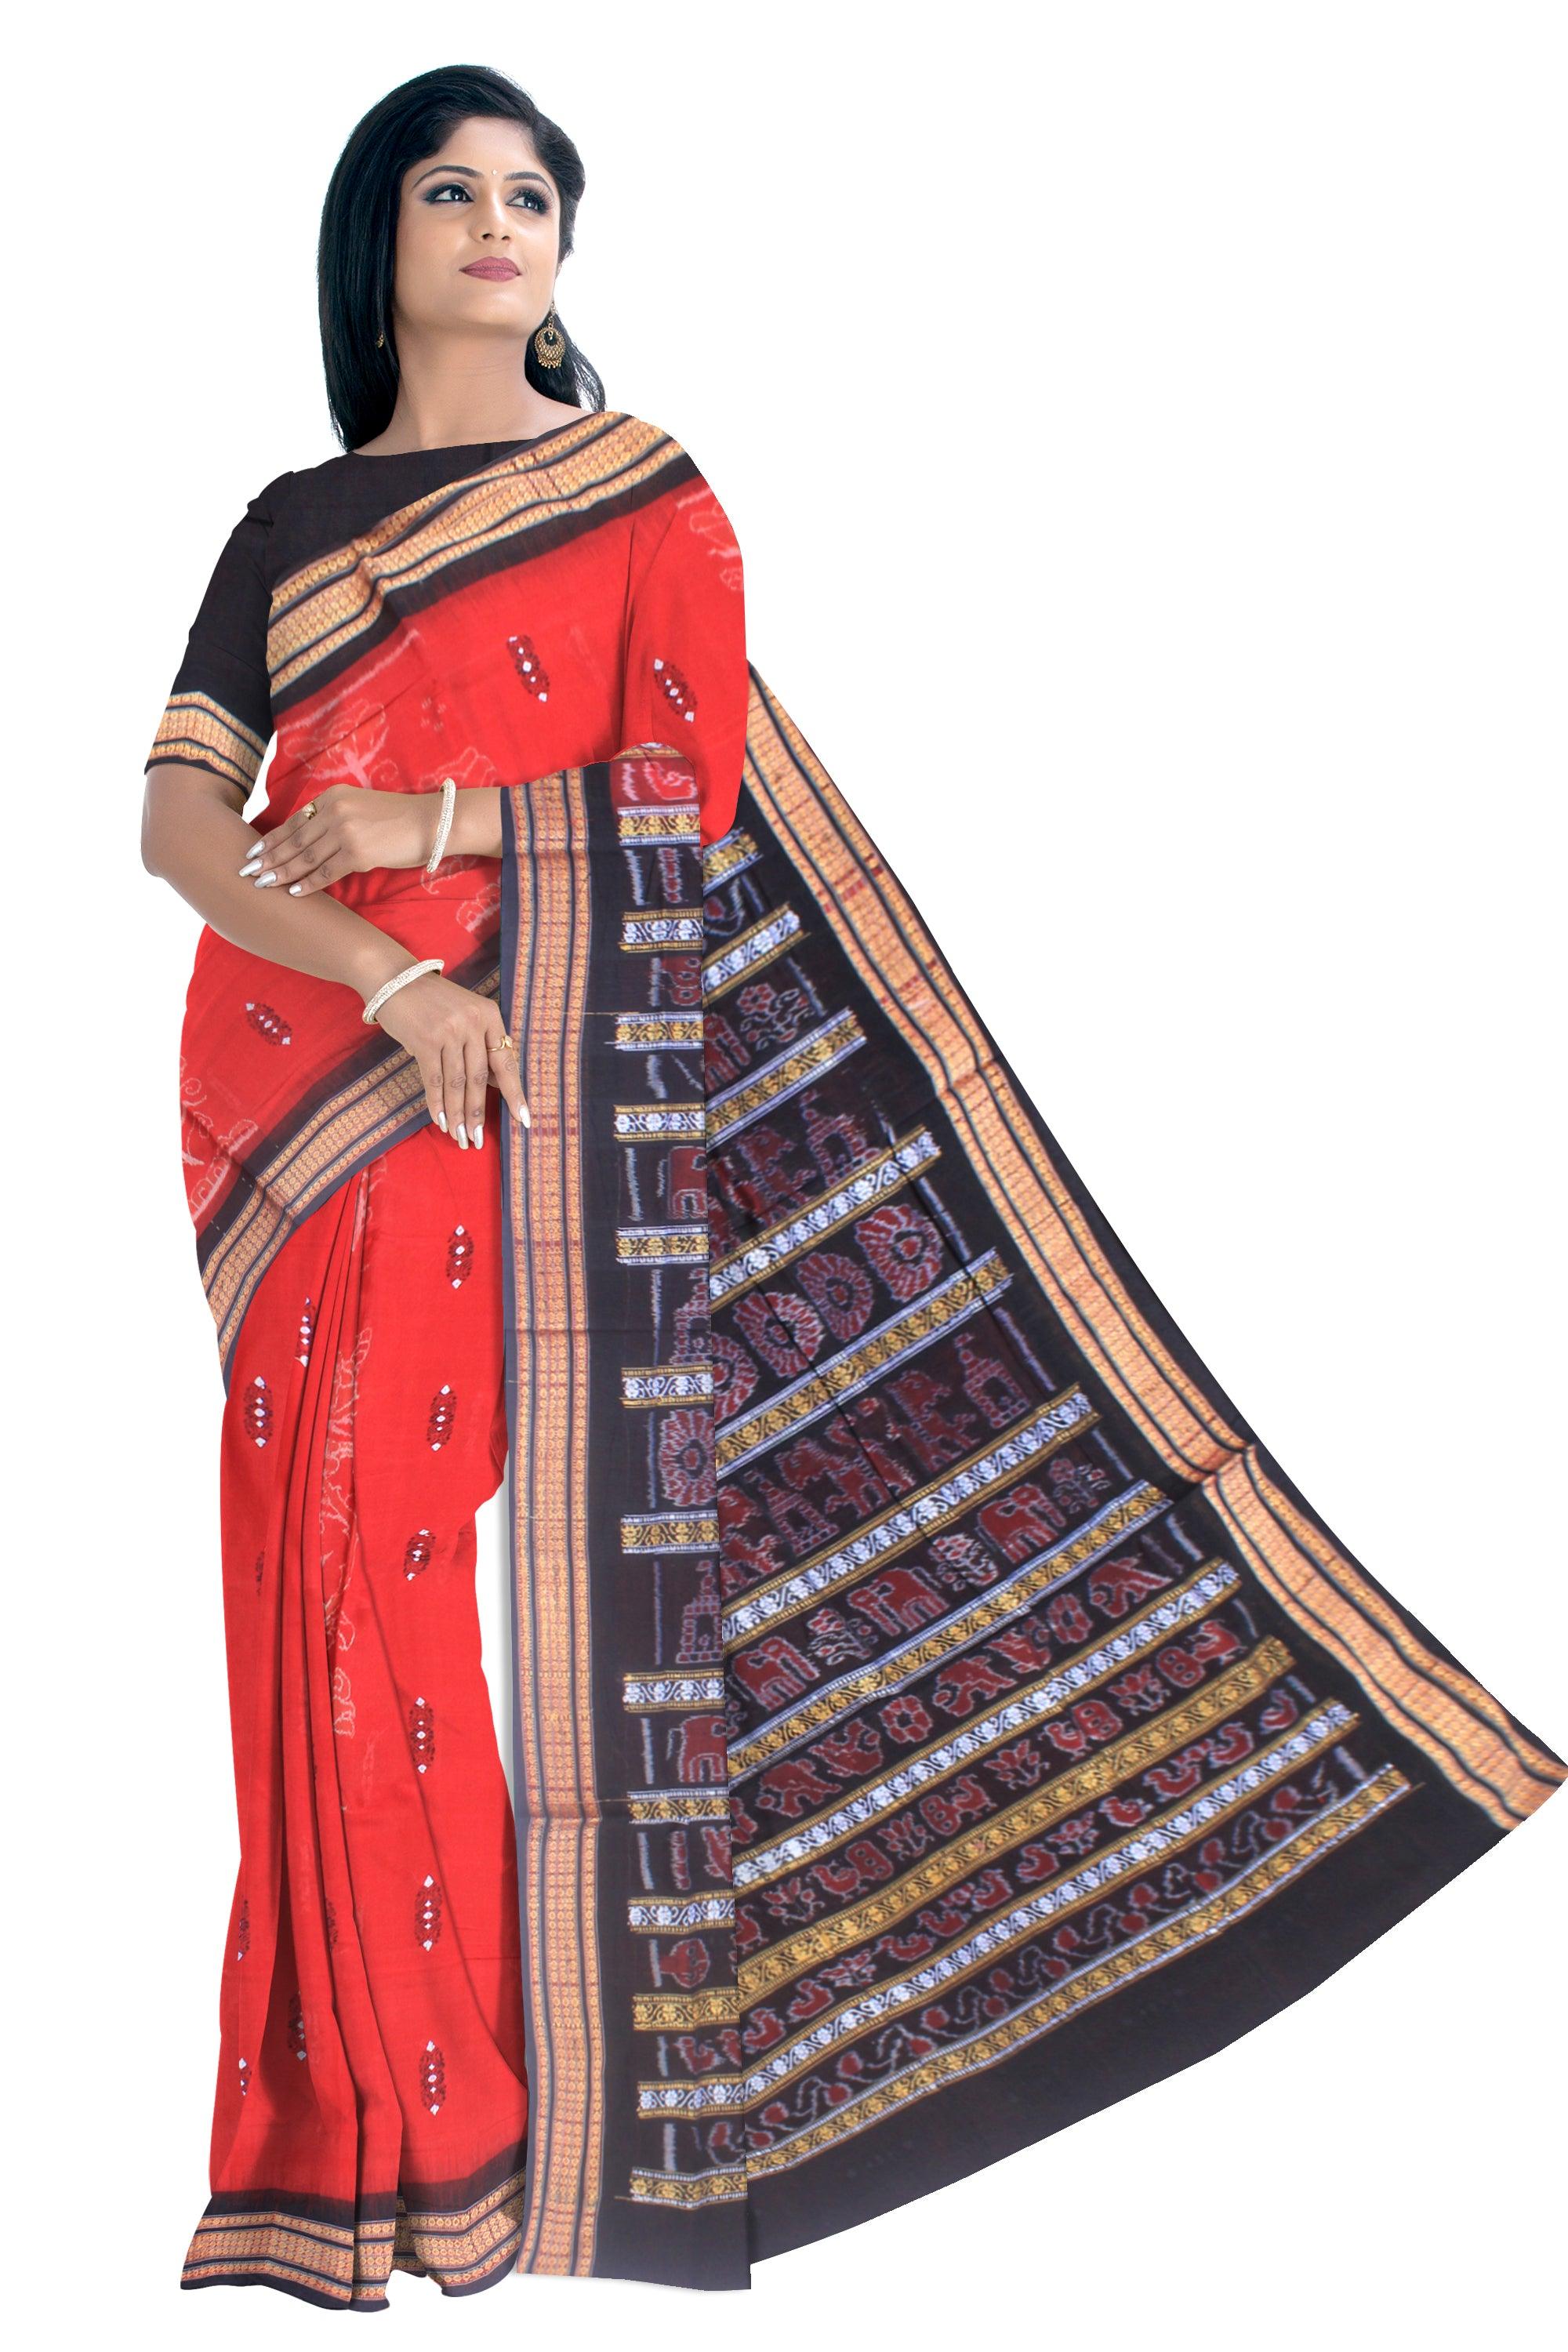 Latest design of bandha sambalpuri cotton saree in red and black color, with blouse piece. - Koshali Arts & Crafts Enterprise